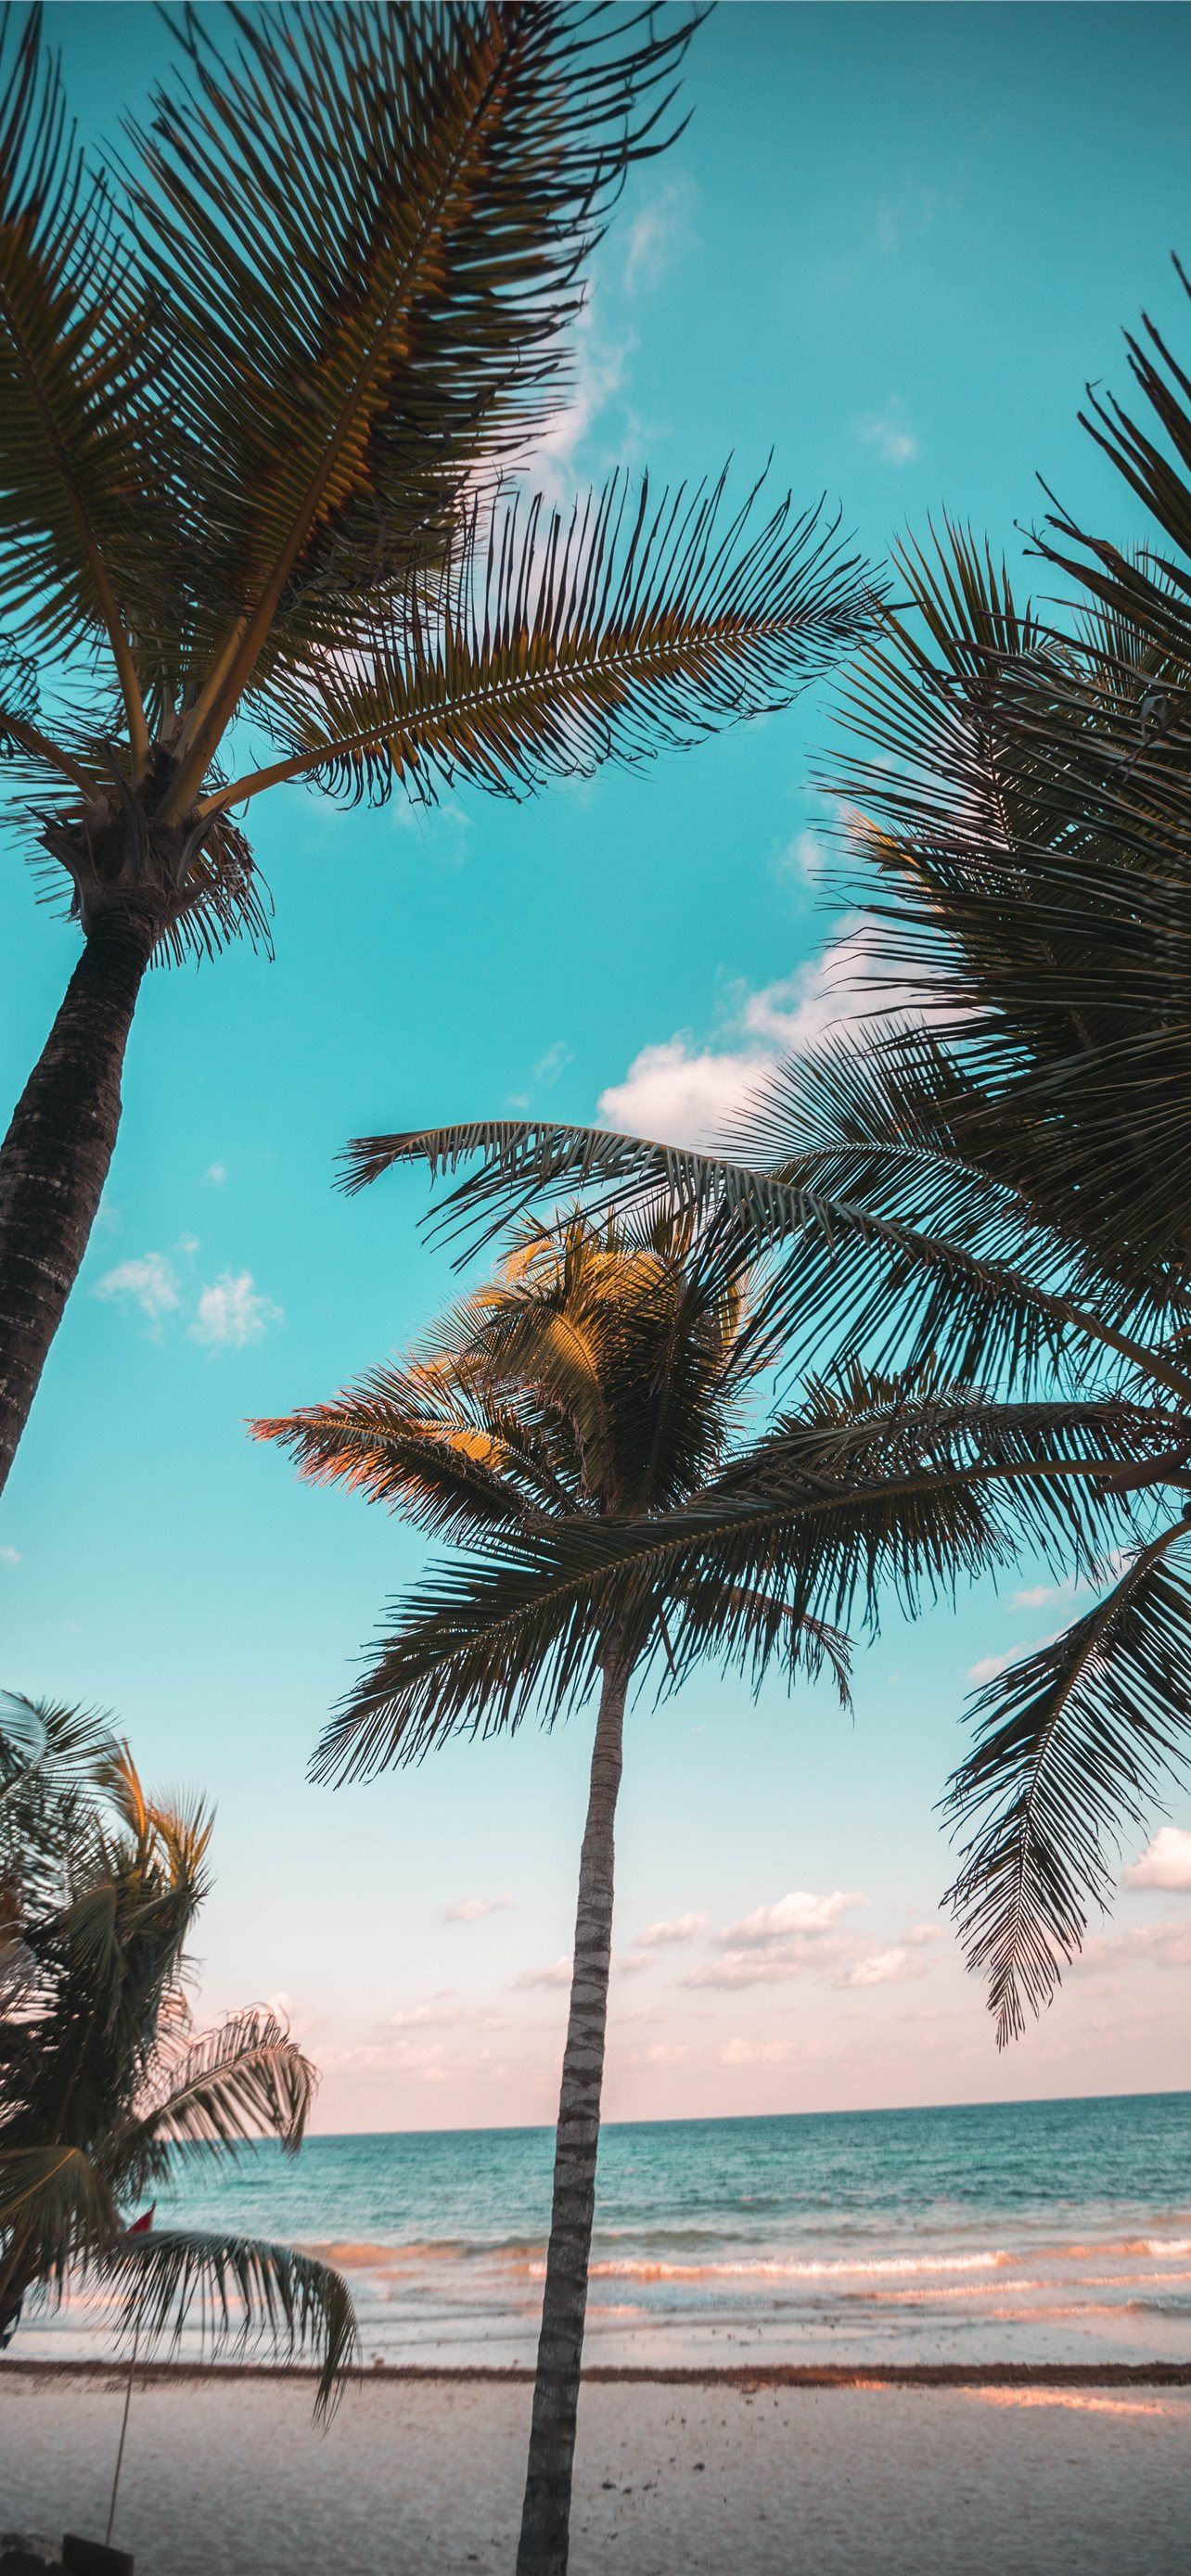 Palm trees on the beach - Coconut